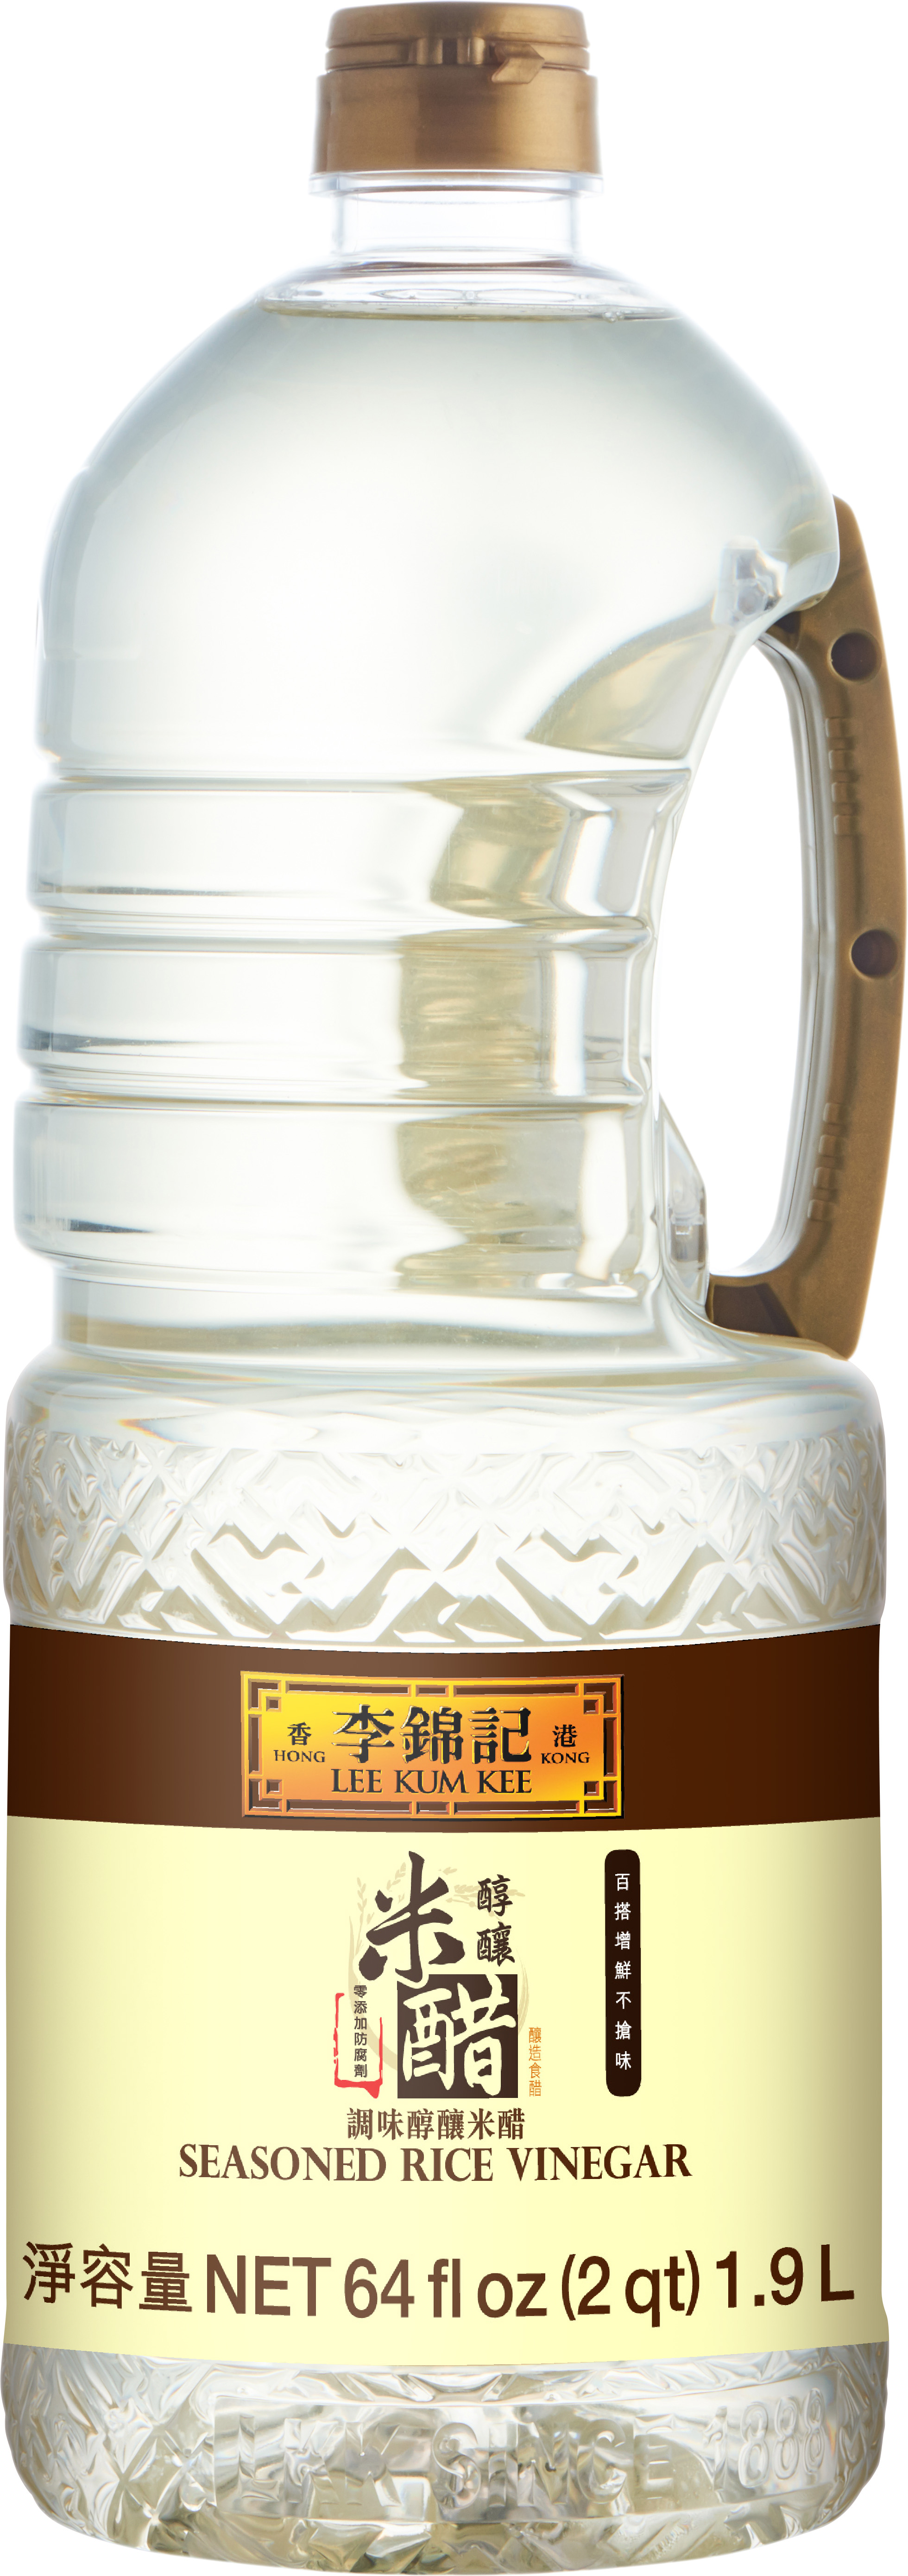 Seasoned Rice Vinegar 64 fl oz 19 L